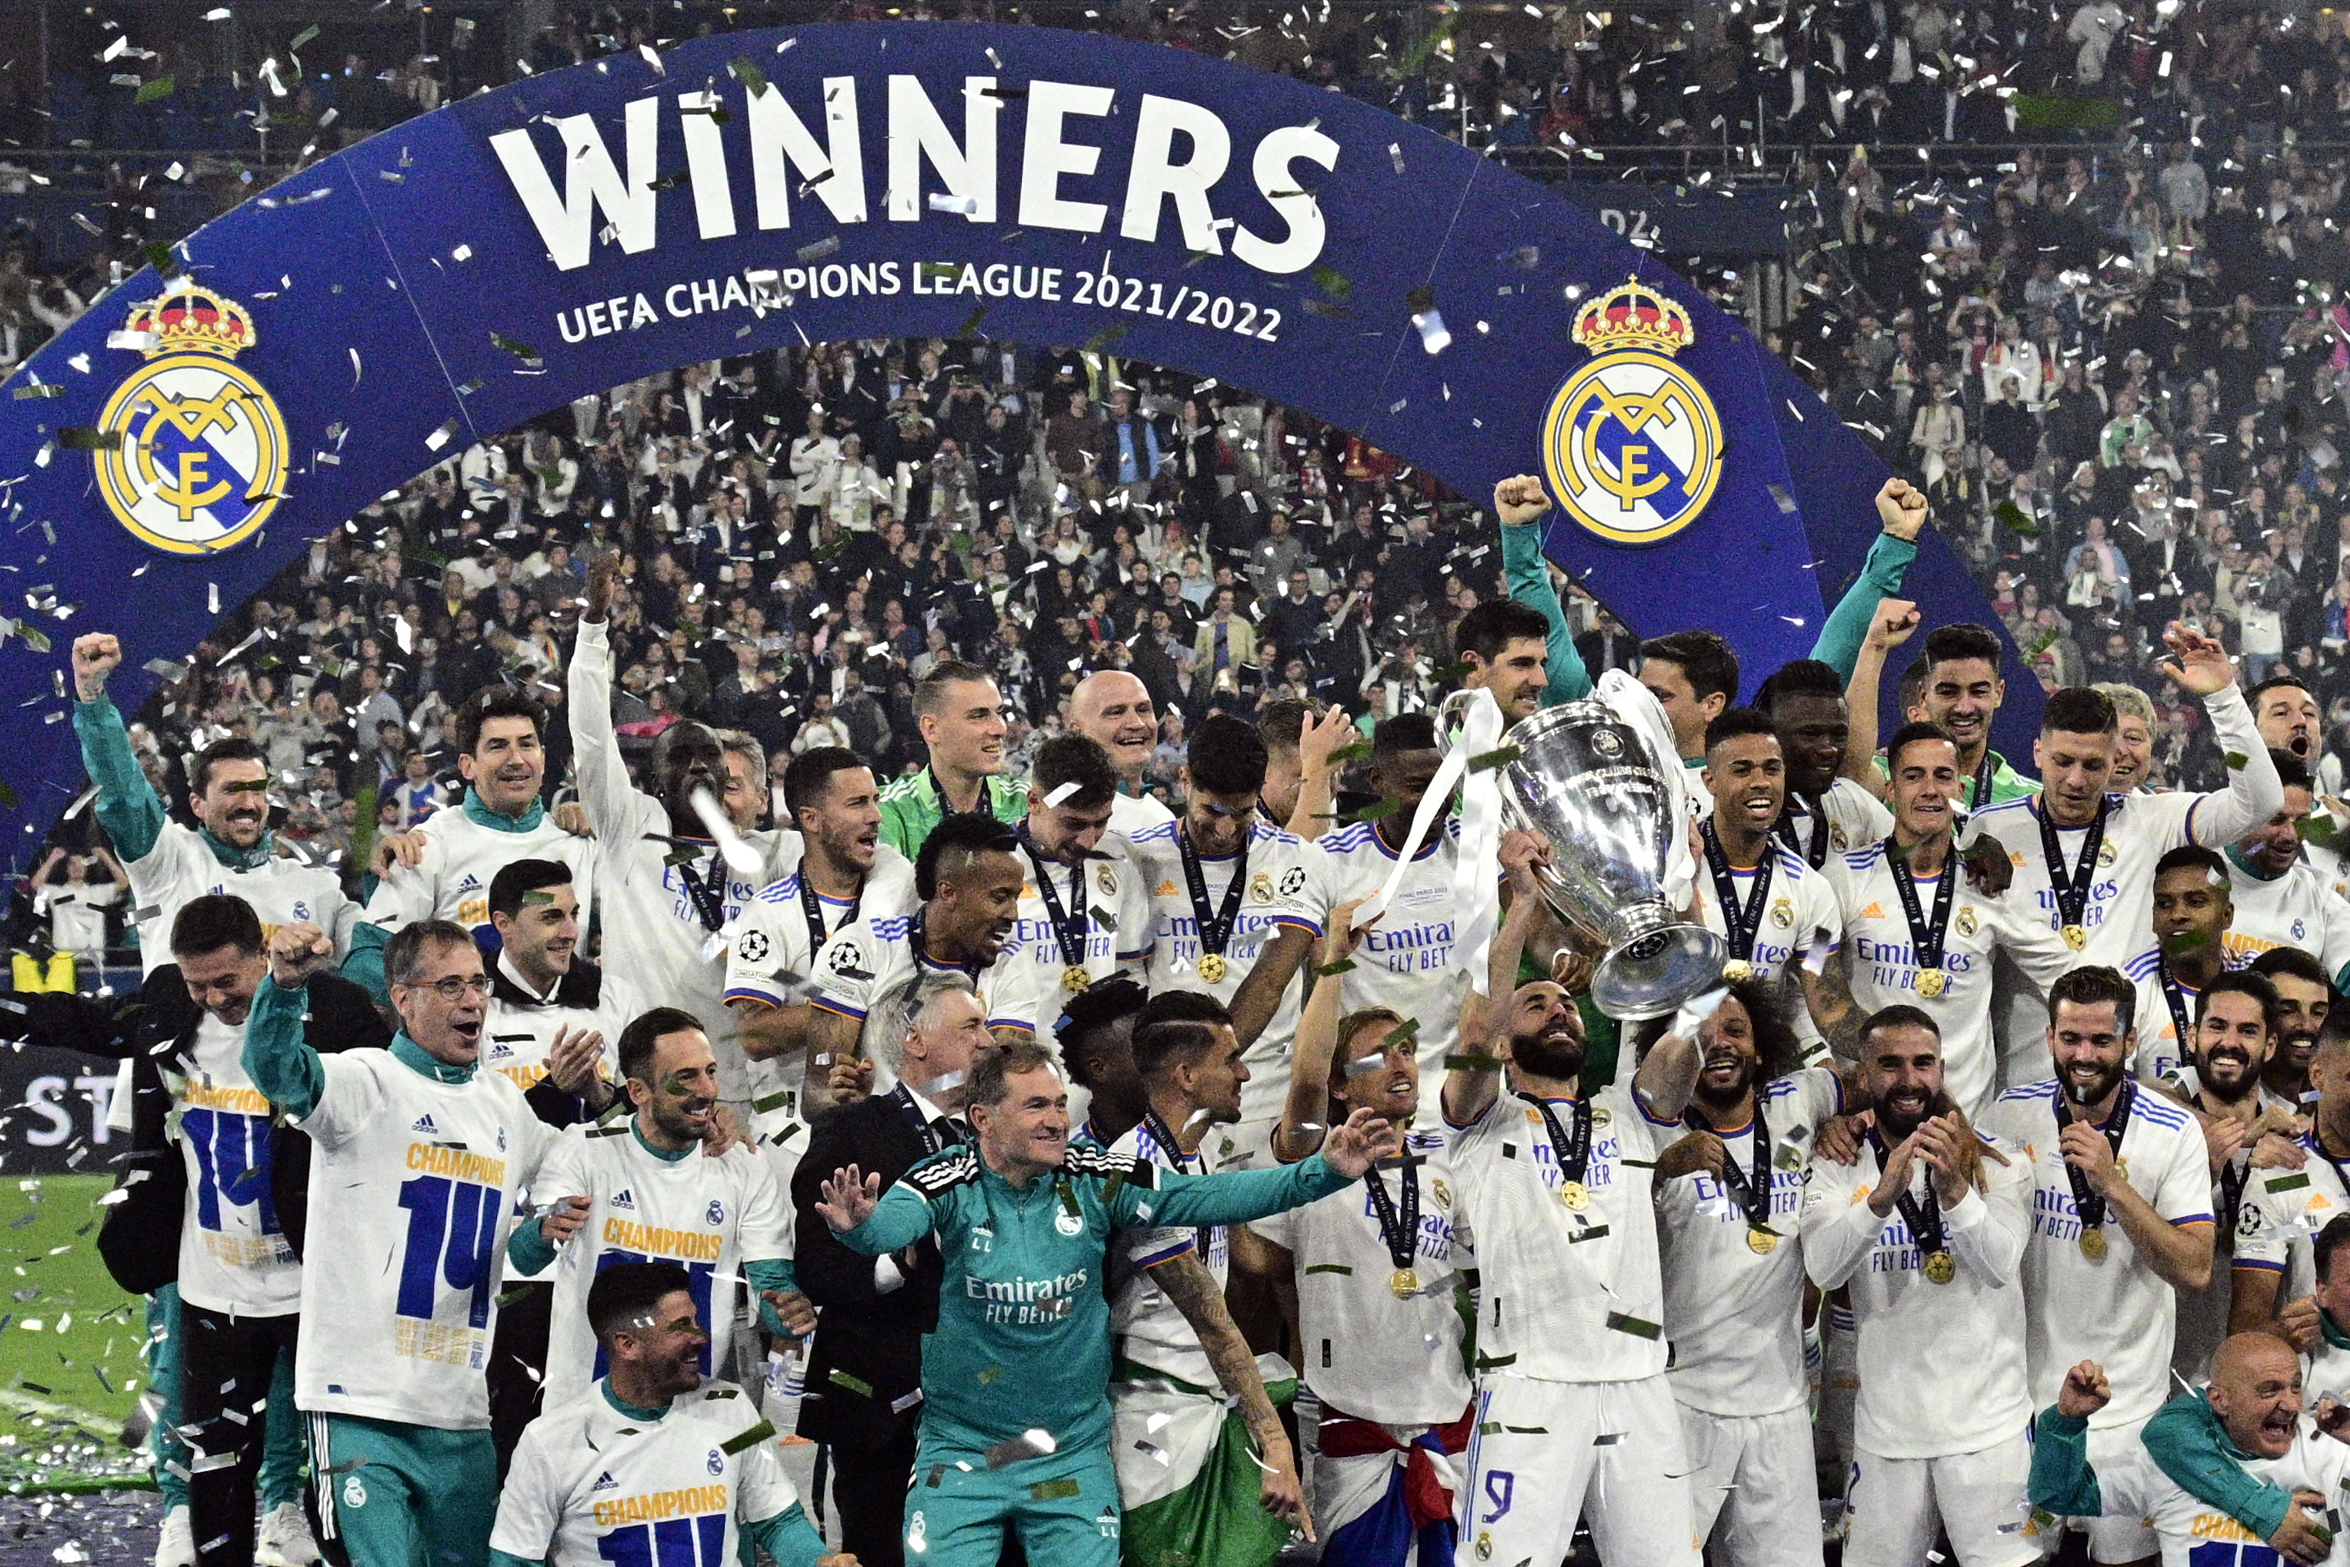 Melhor em Campo PlayStation®na final da Champions League: Thibaut Courtois, UEFA Champions League